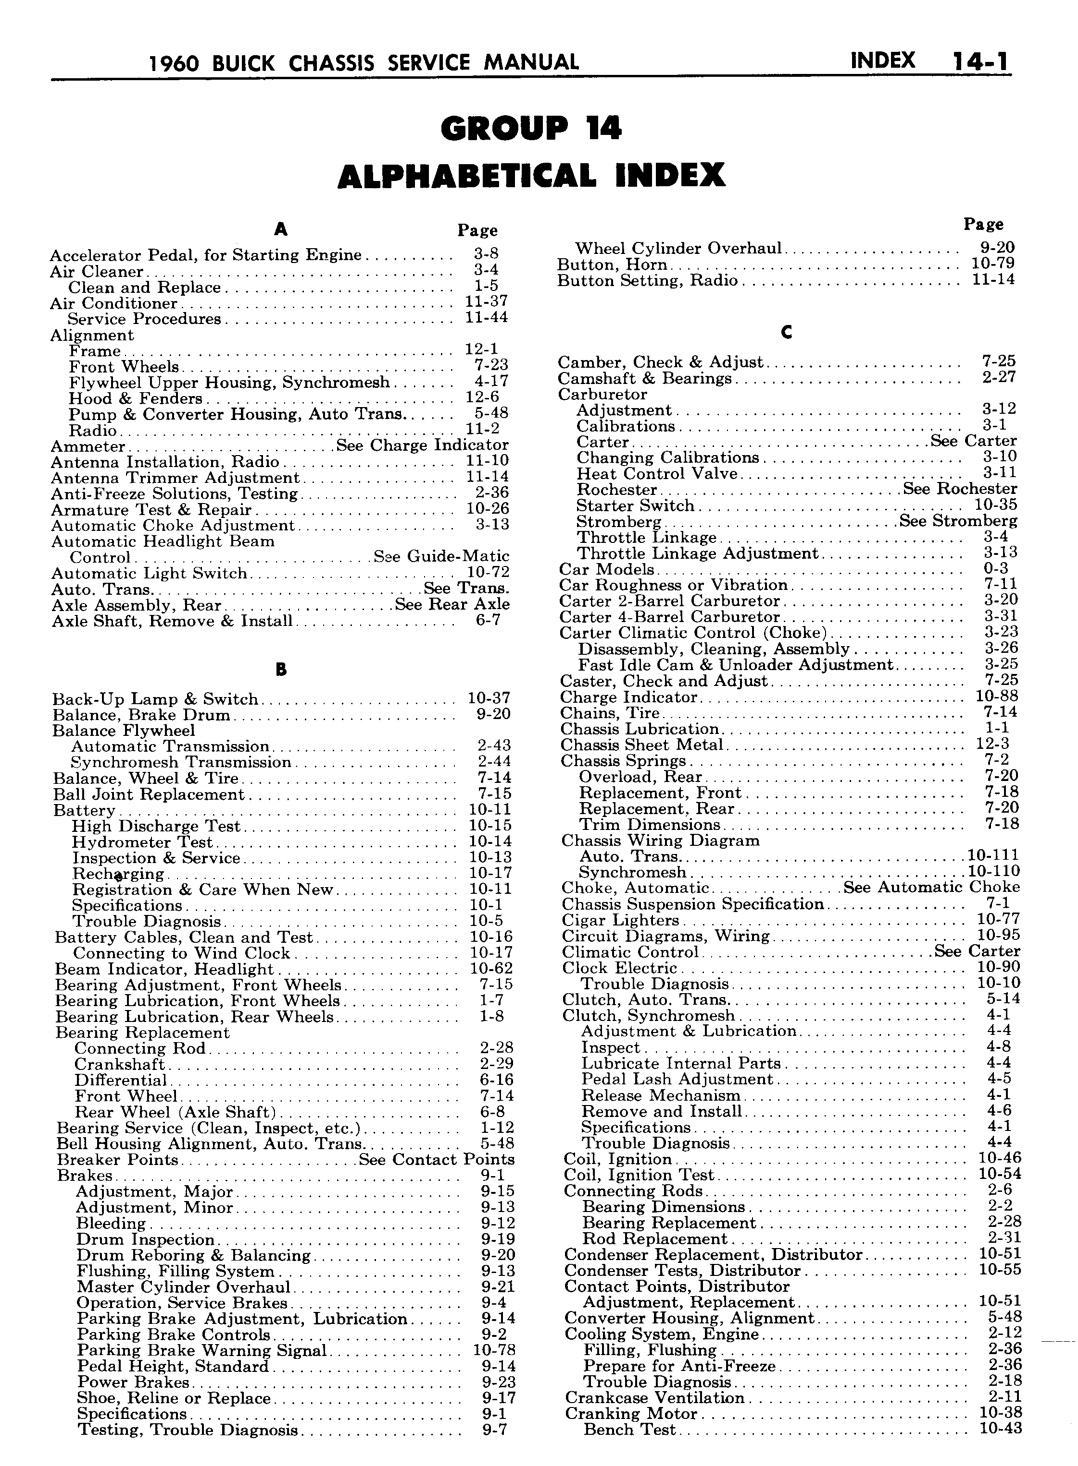 n_14 1960 Buick Shop Manual - Index-001-001.jpg